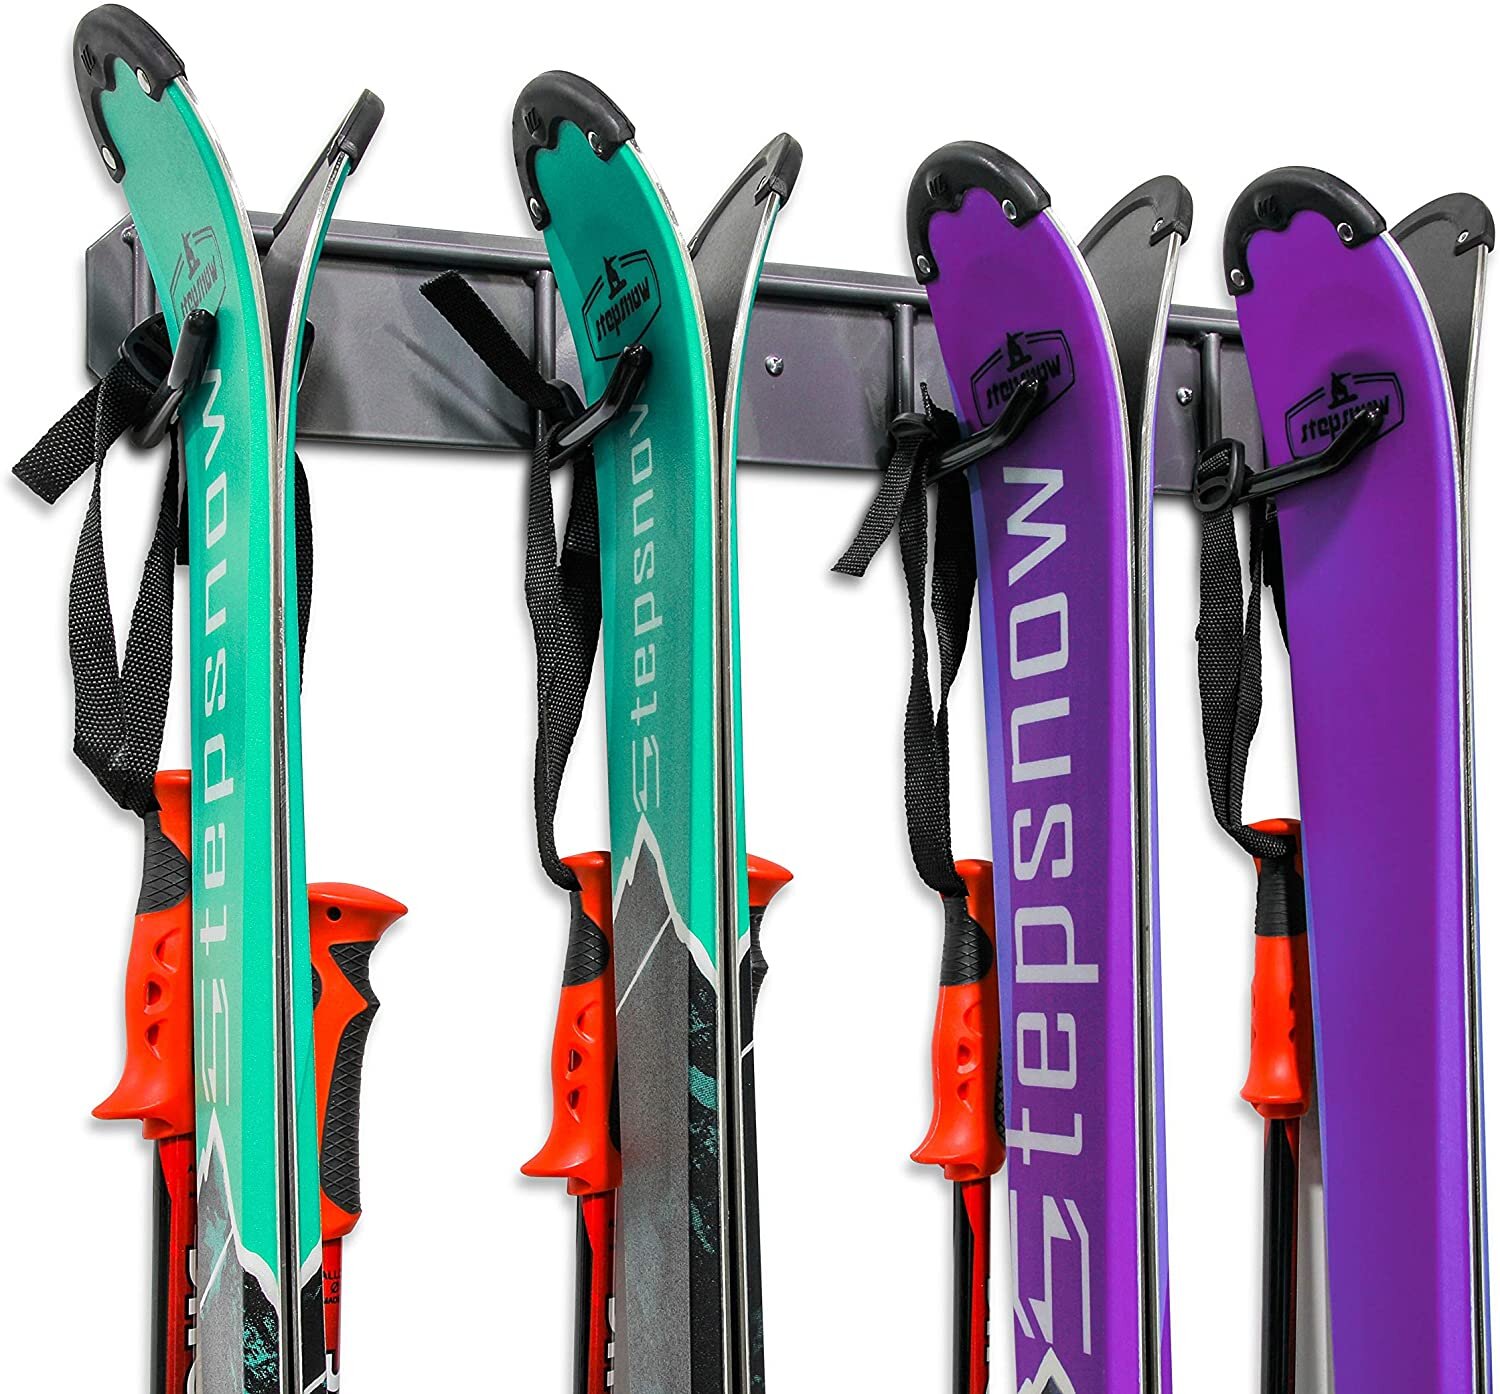 Arlmont & Co. Support à ski / planche à neige mural robuste et